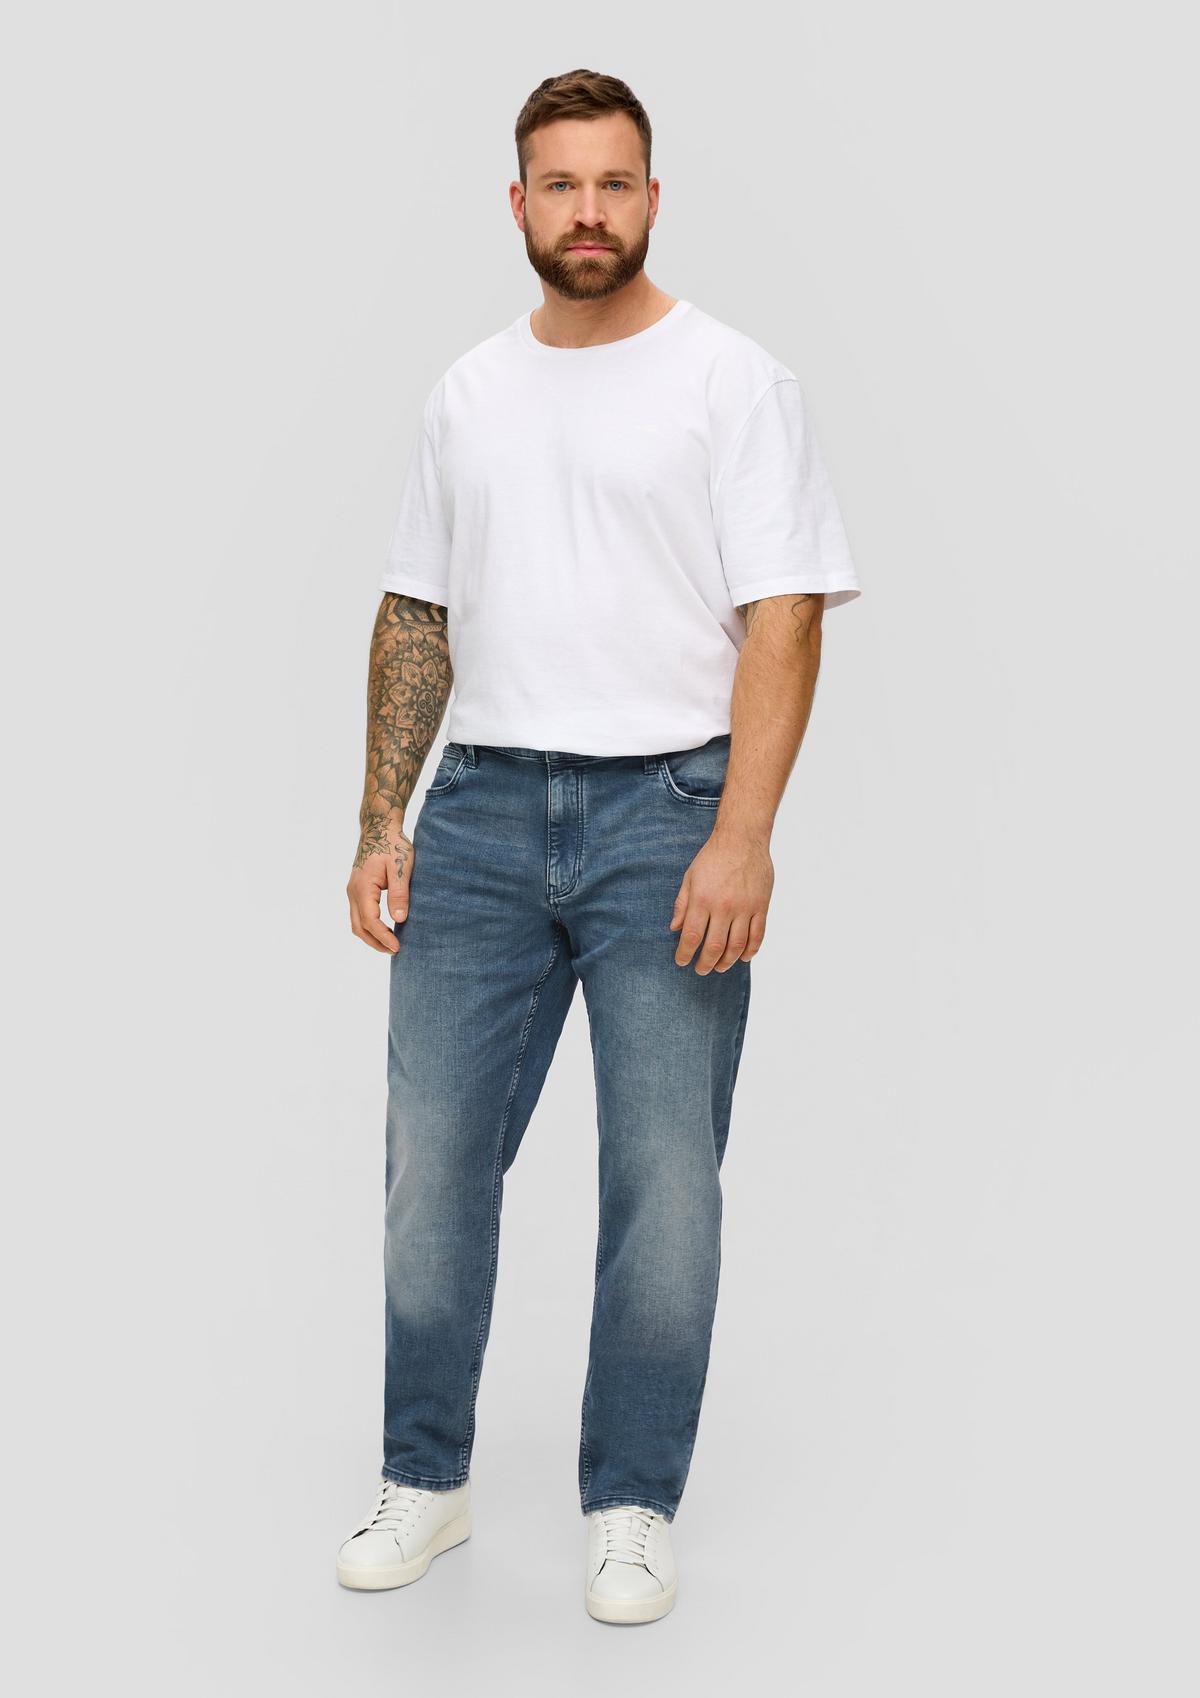 York jeans / / / fit - blue leg regular rise regular mid